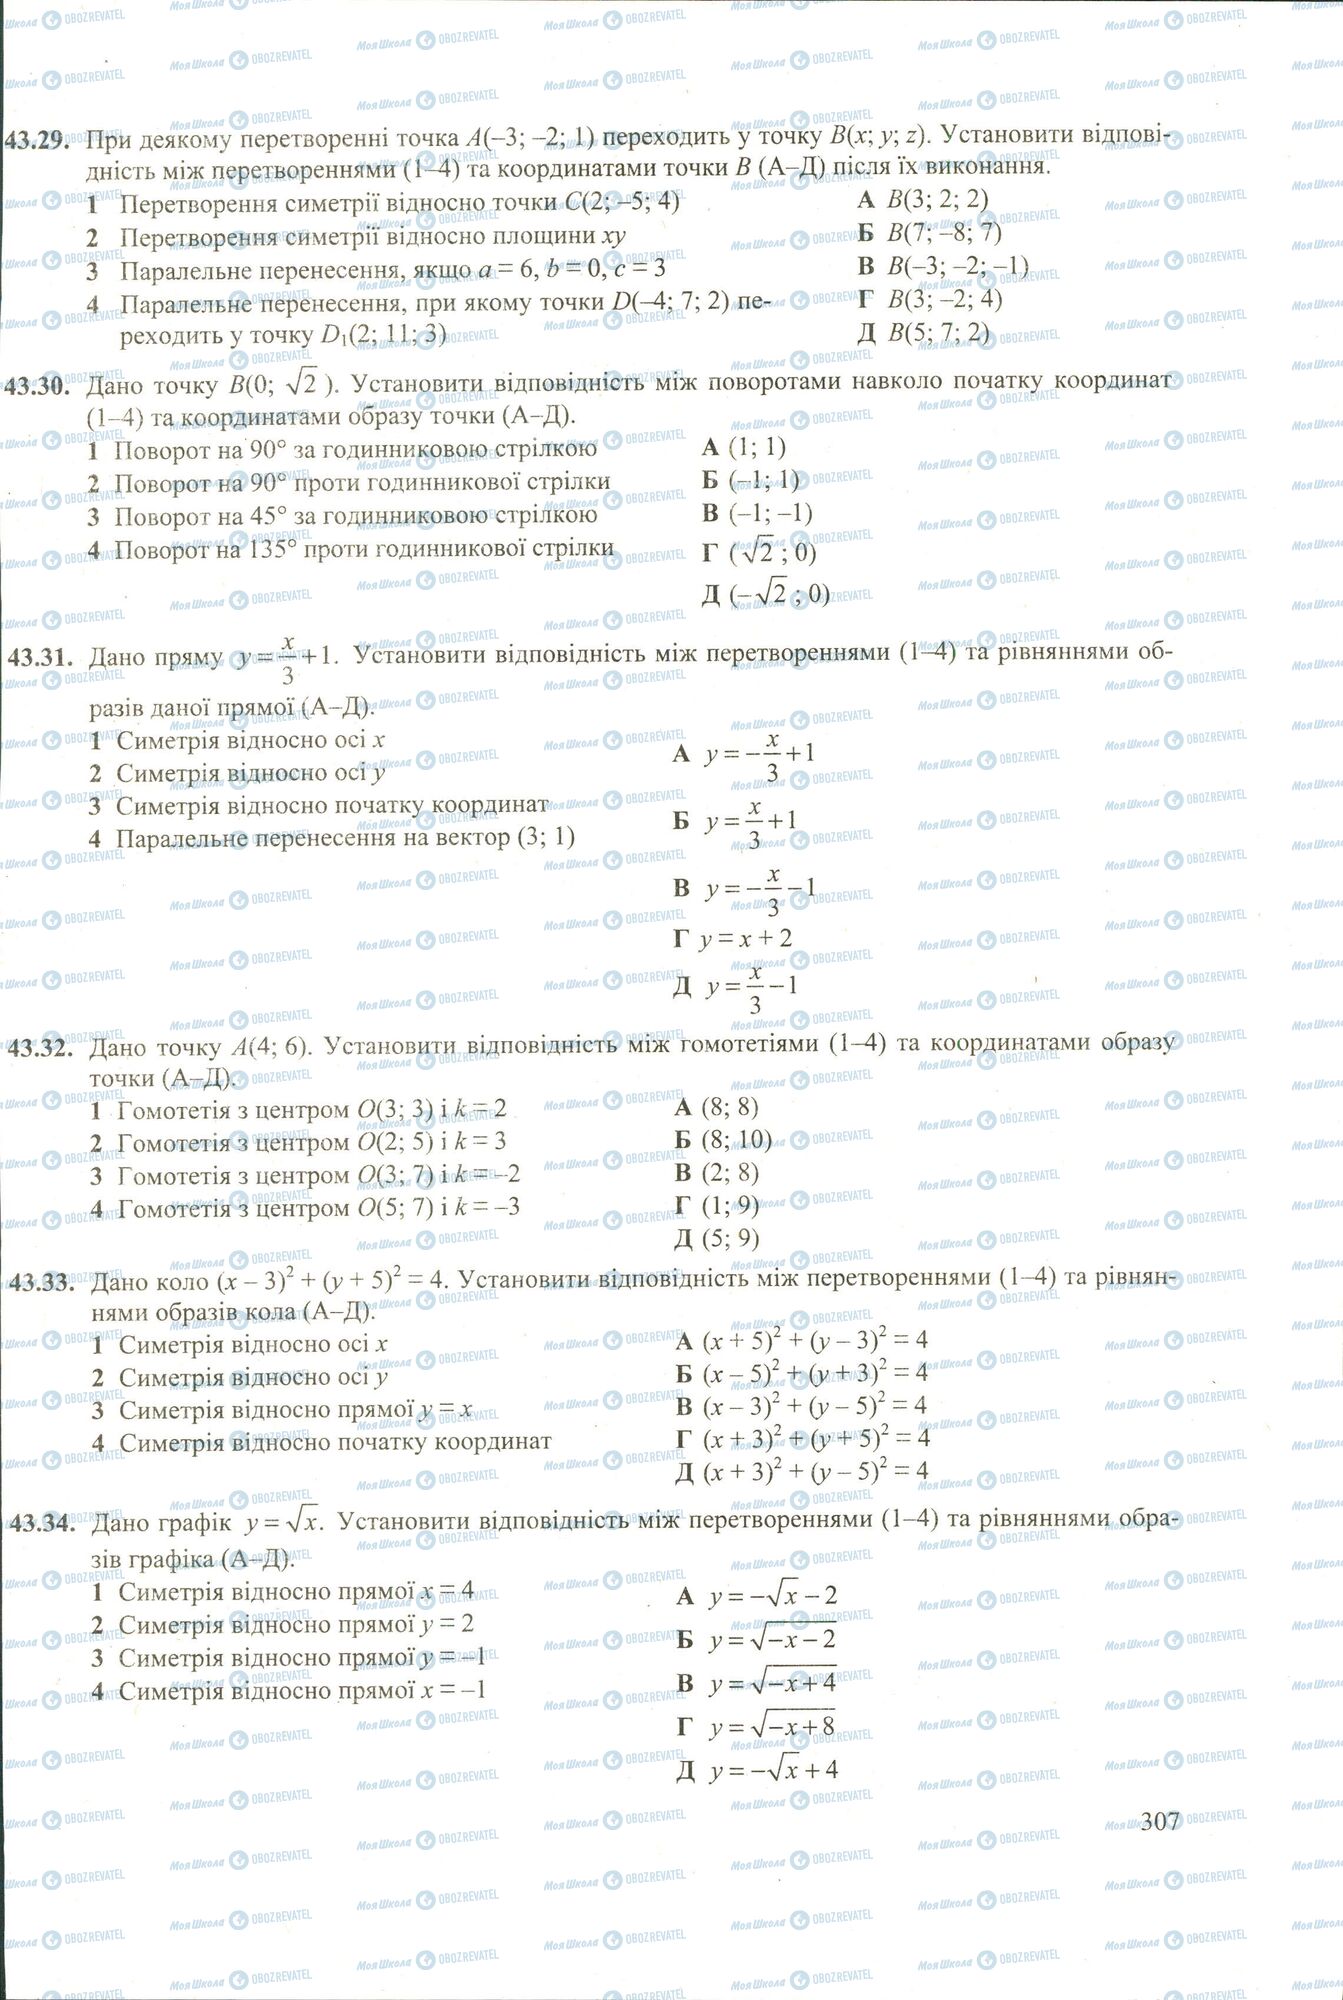 ЗНО Математика 11 класс страница 29-34